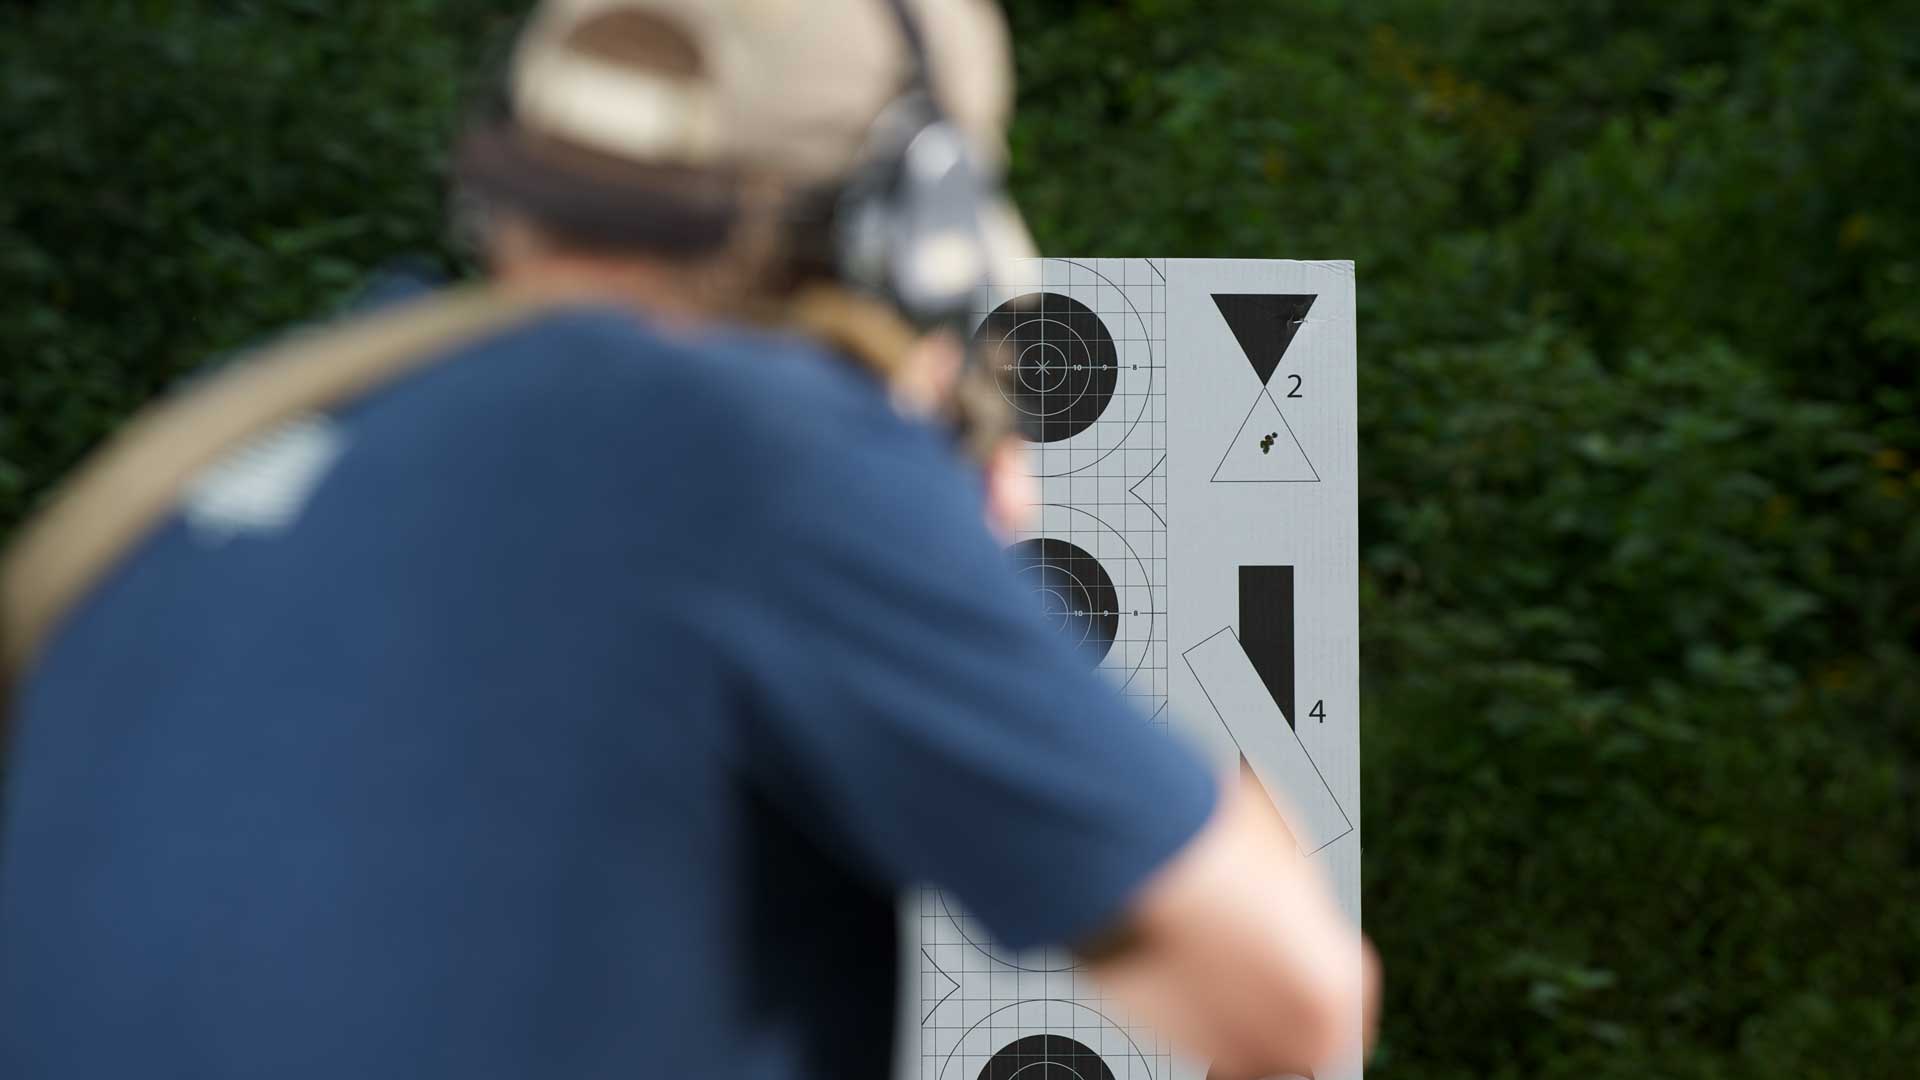 man blue shirt outdoors shooting rifle target